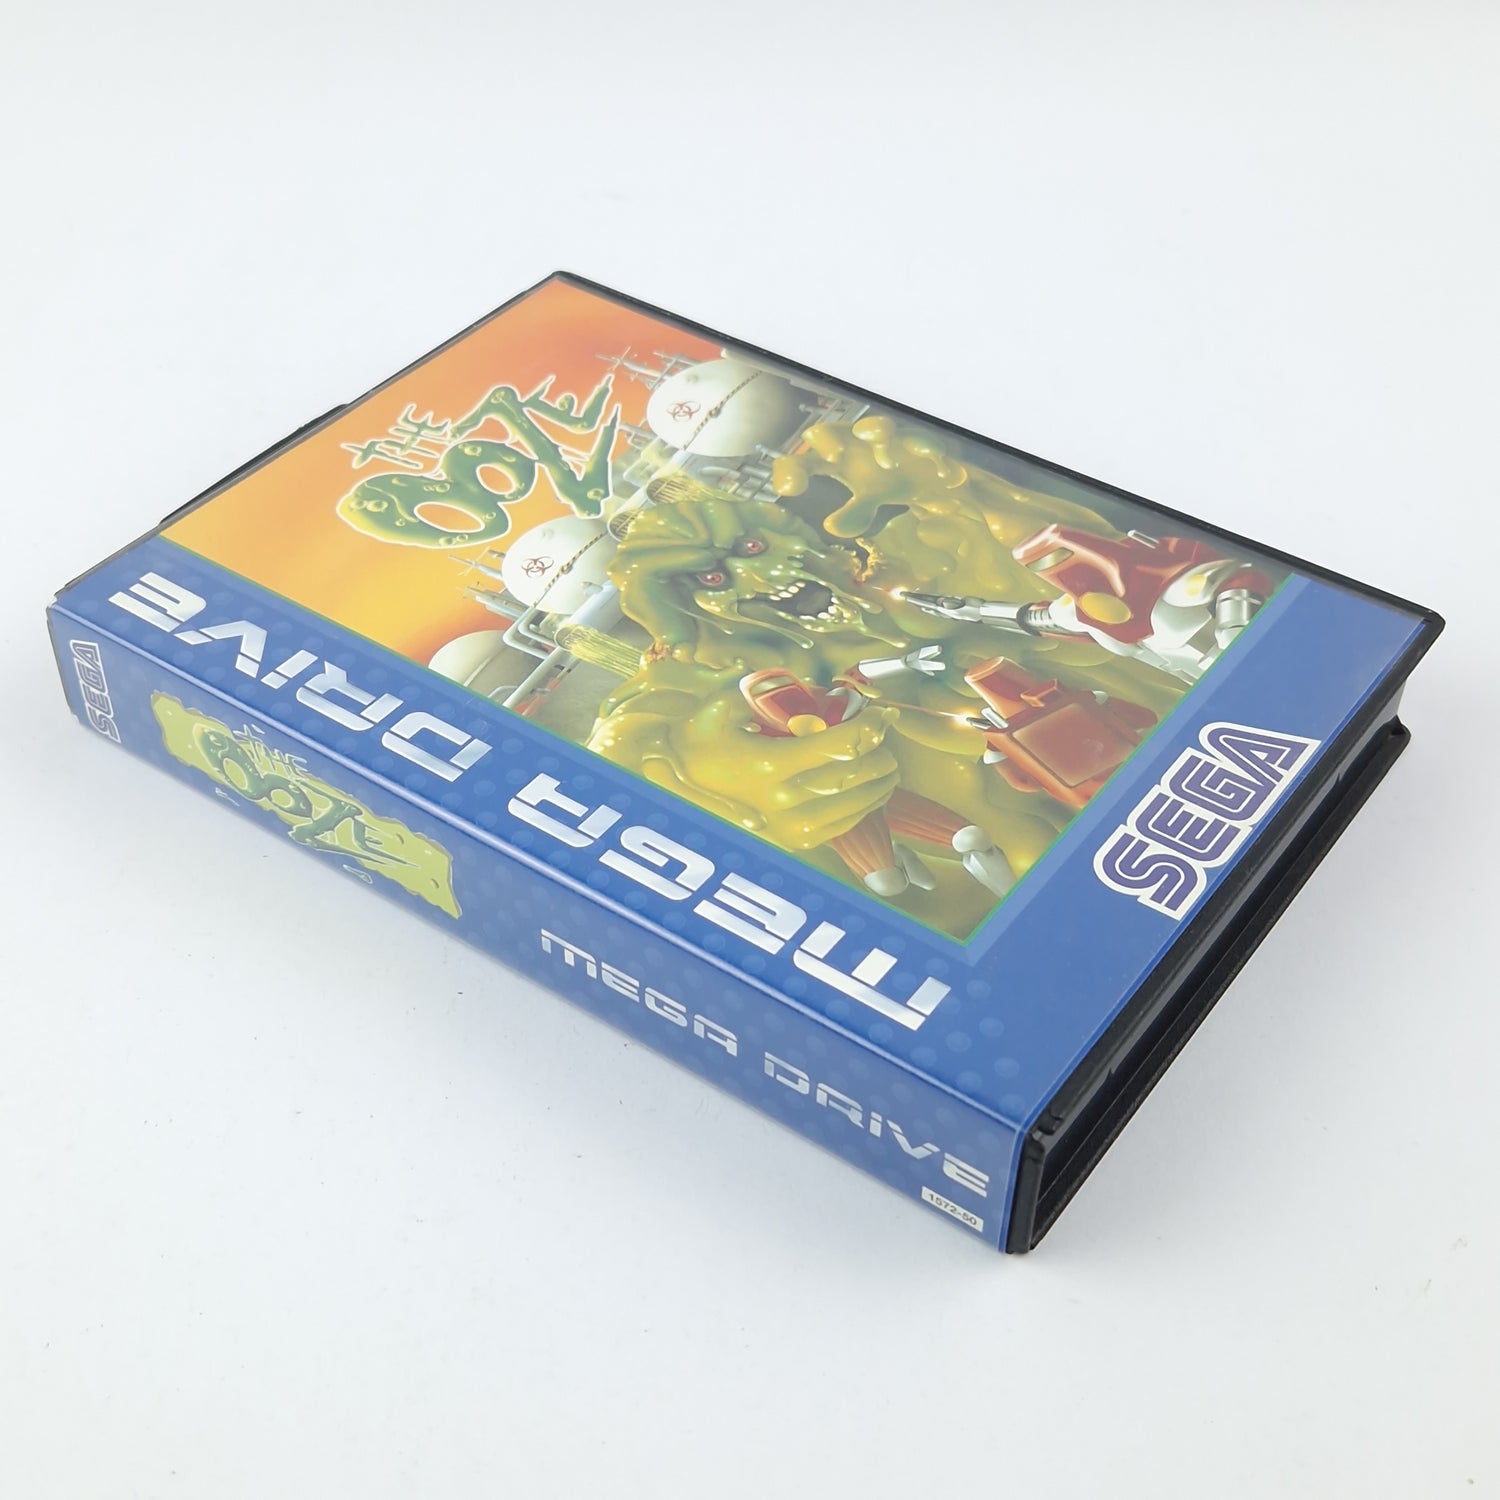 Sega Mega Drive Spiel : The Ooze - Modul Anleitung OVP cib / MD Pal Game